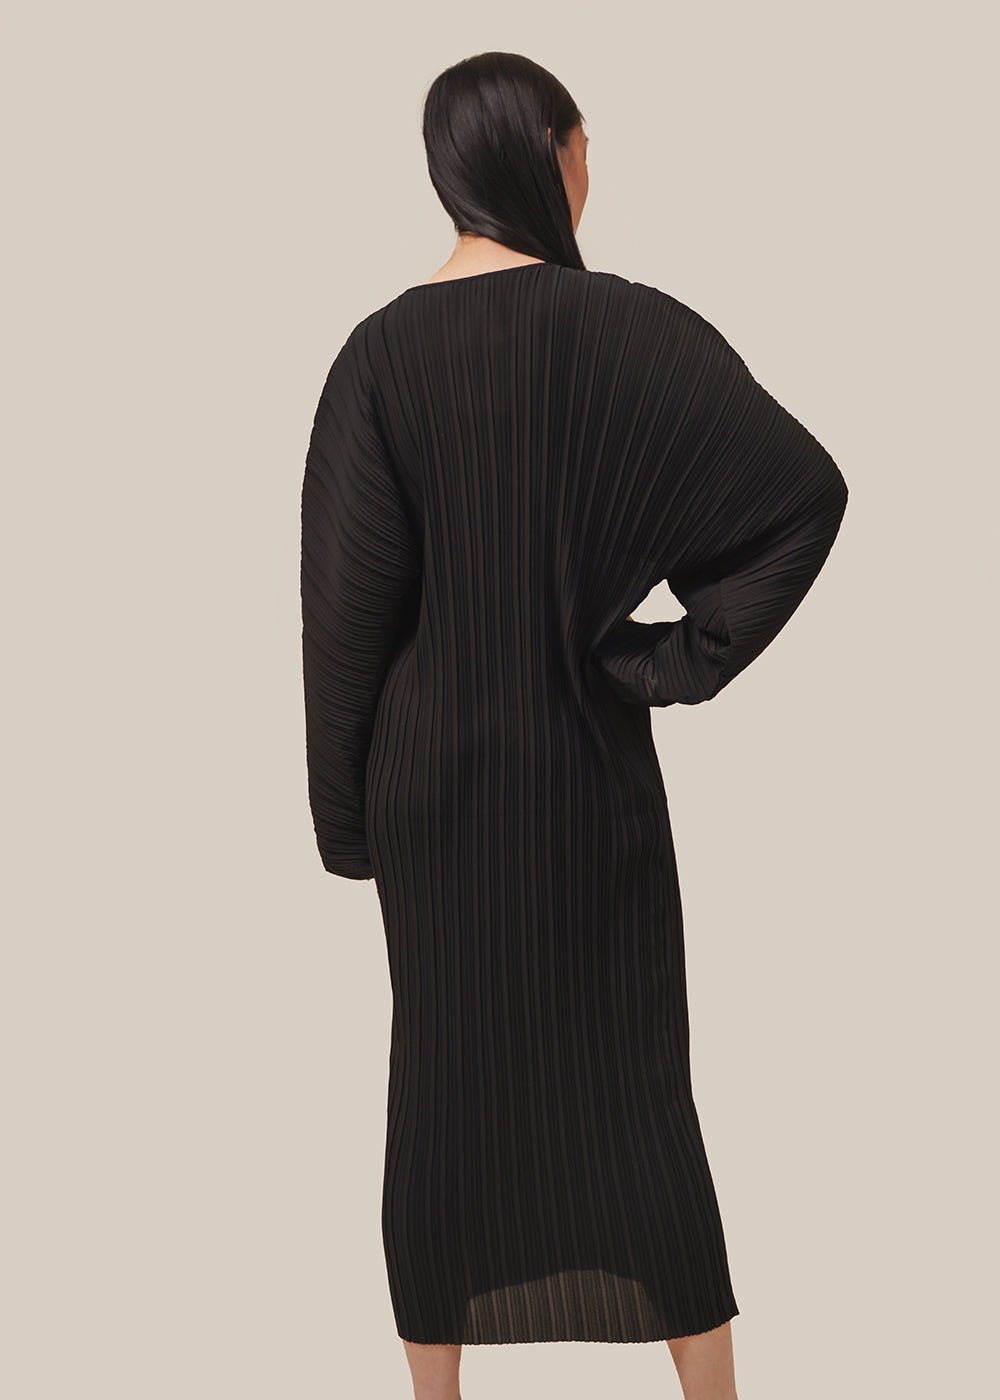 Stylein Black Indo Dress - New Classics Studios Sustainable Ethical Fashion Canada